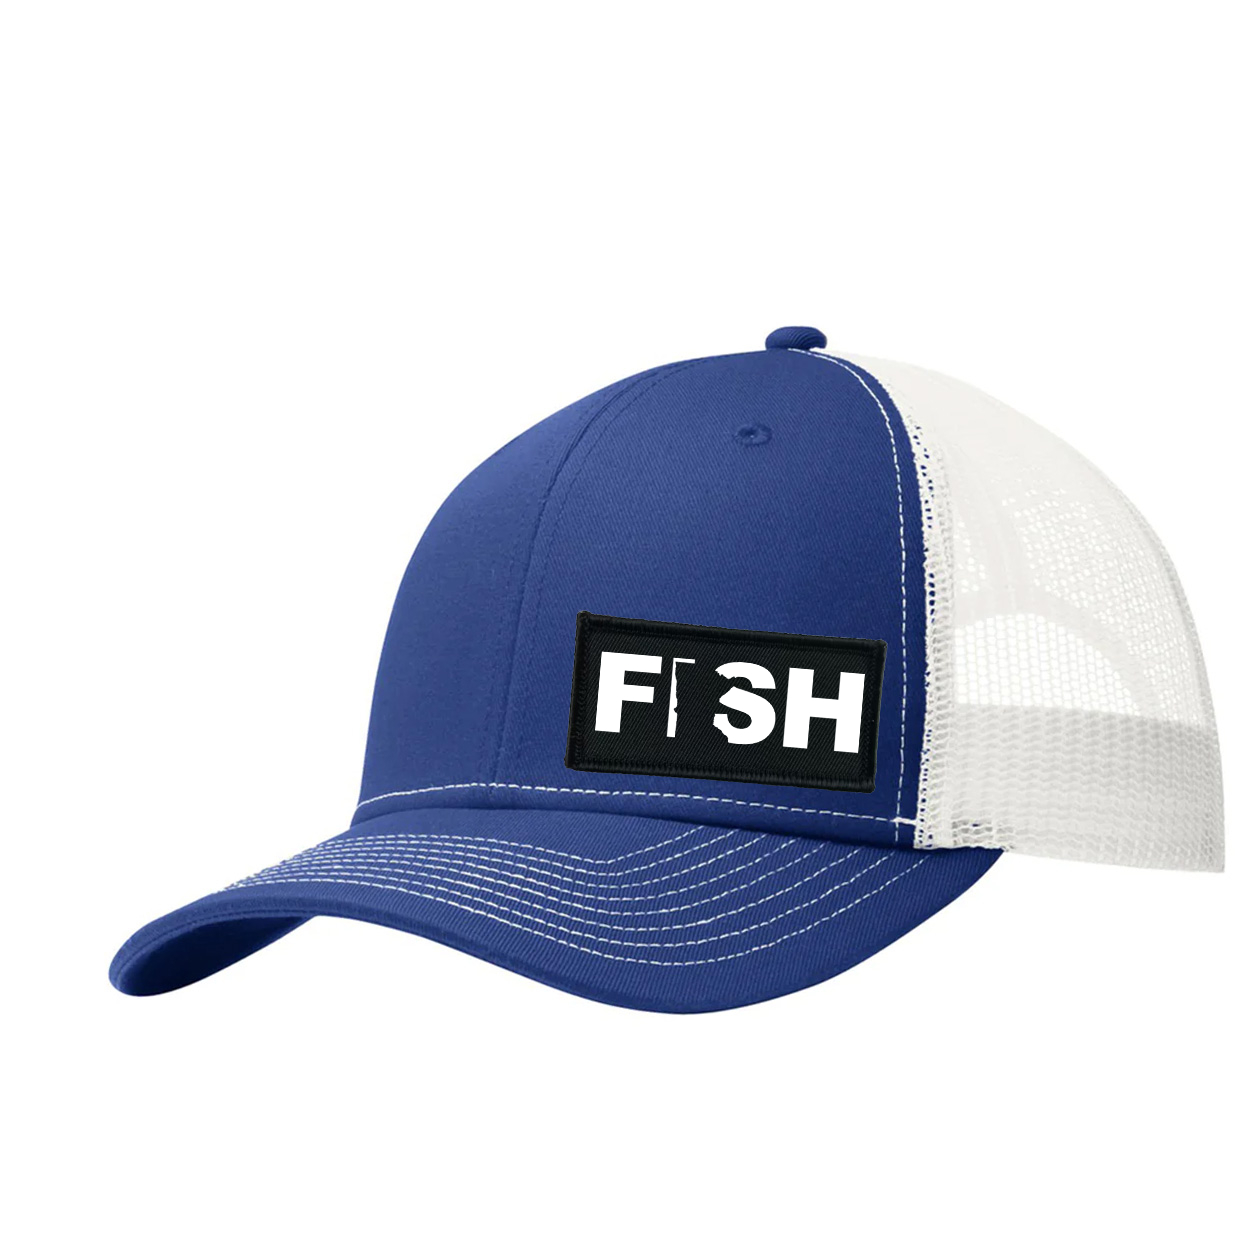 Fish Minnesota Night Out Woven Patch Snapback Trucker Hat Dark Royal/White (White Logo)